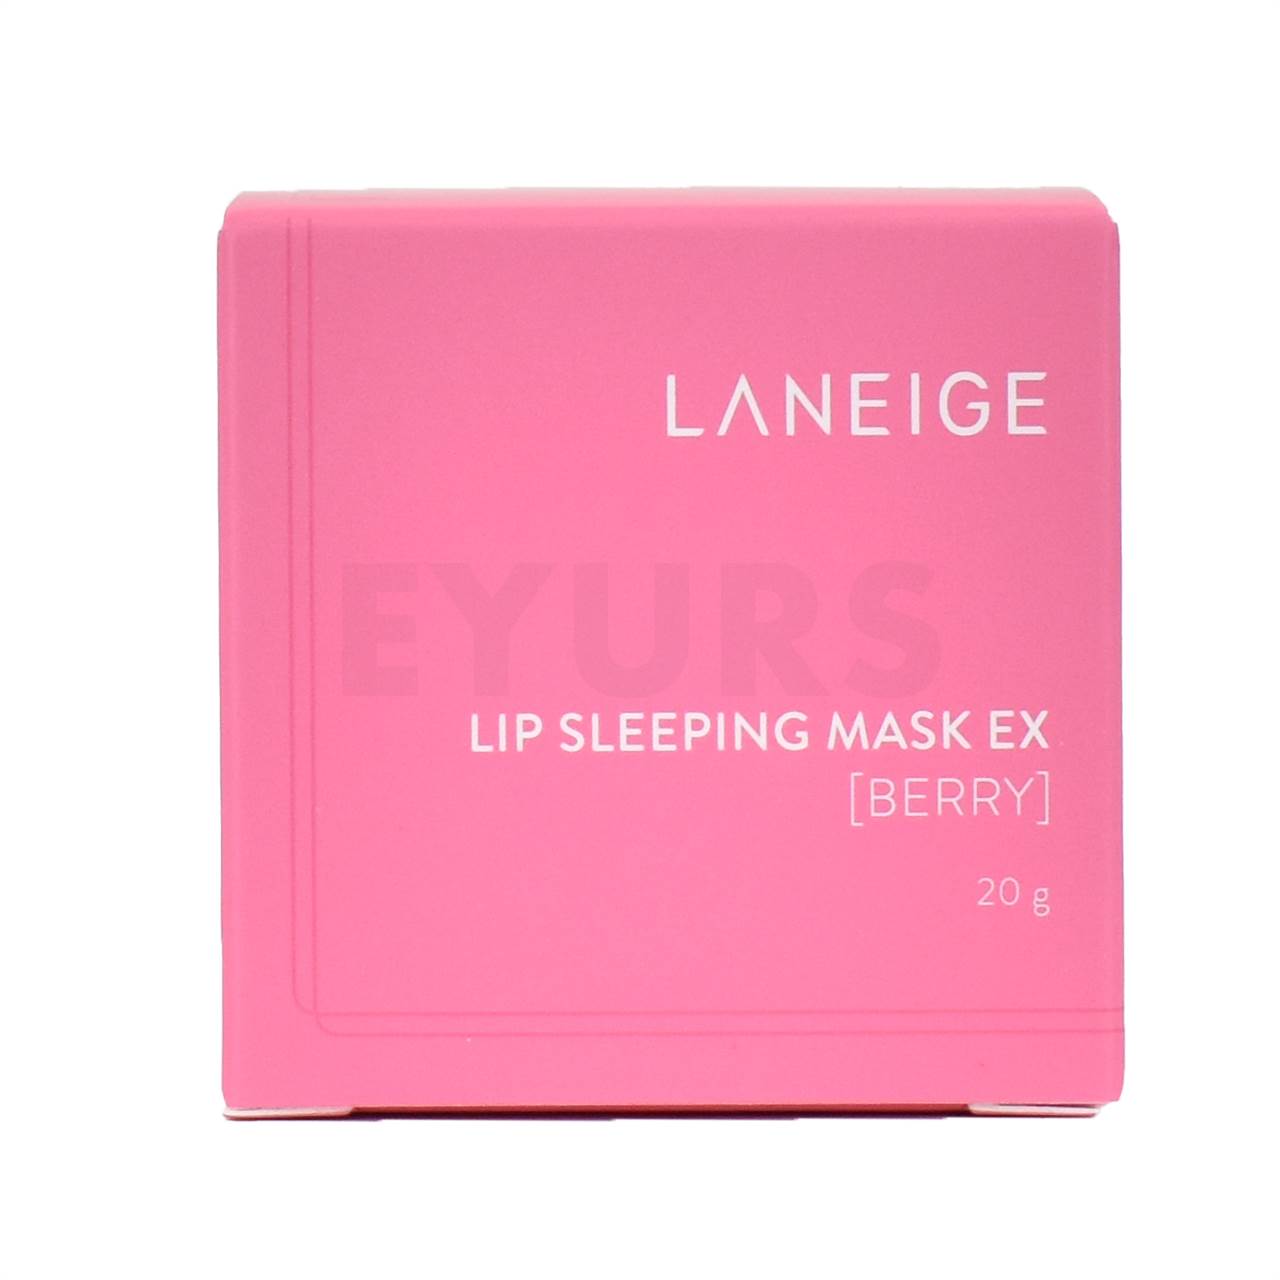 laneige lip sleeping mask berry ex 20g front side packaging